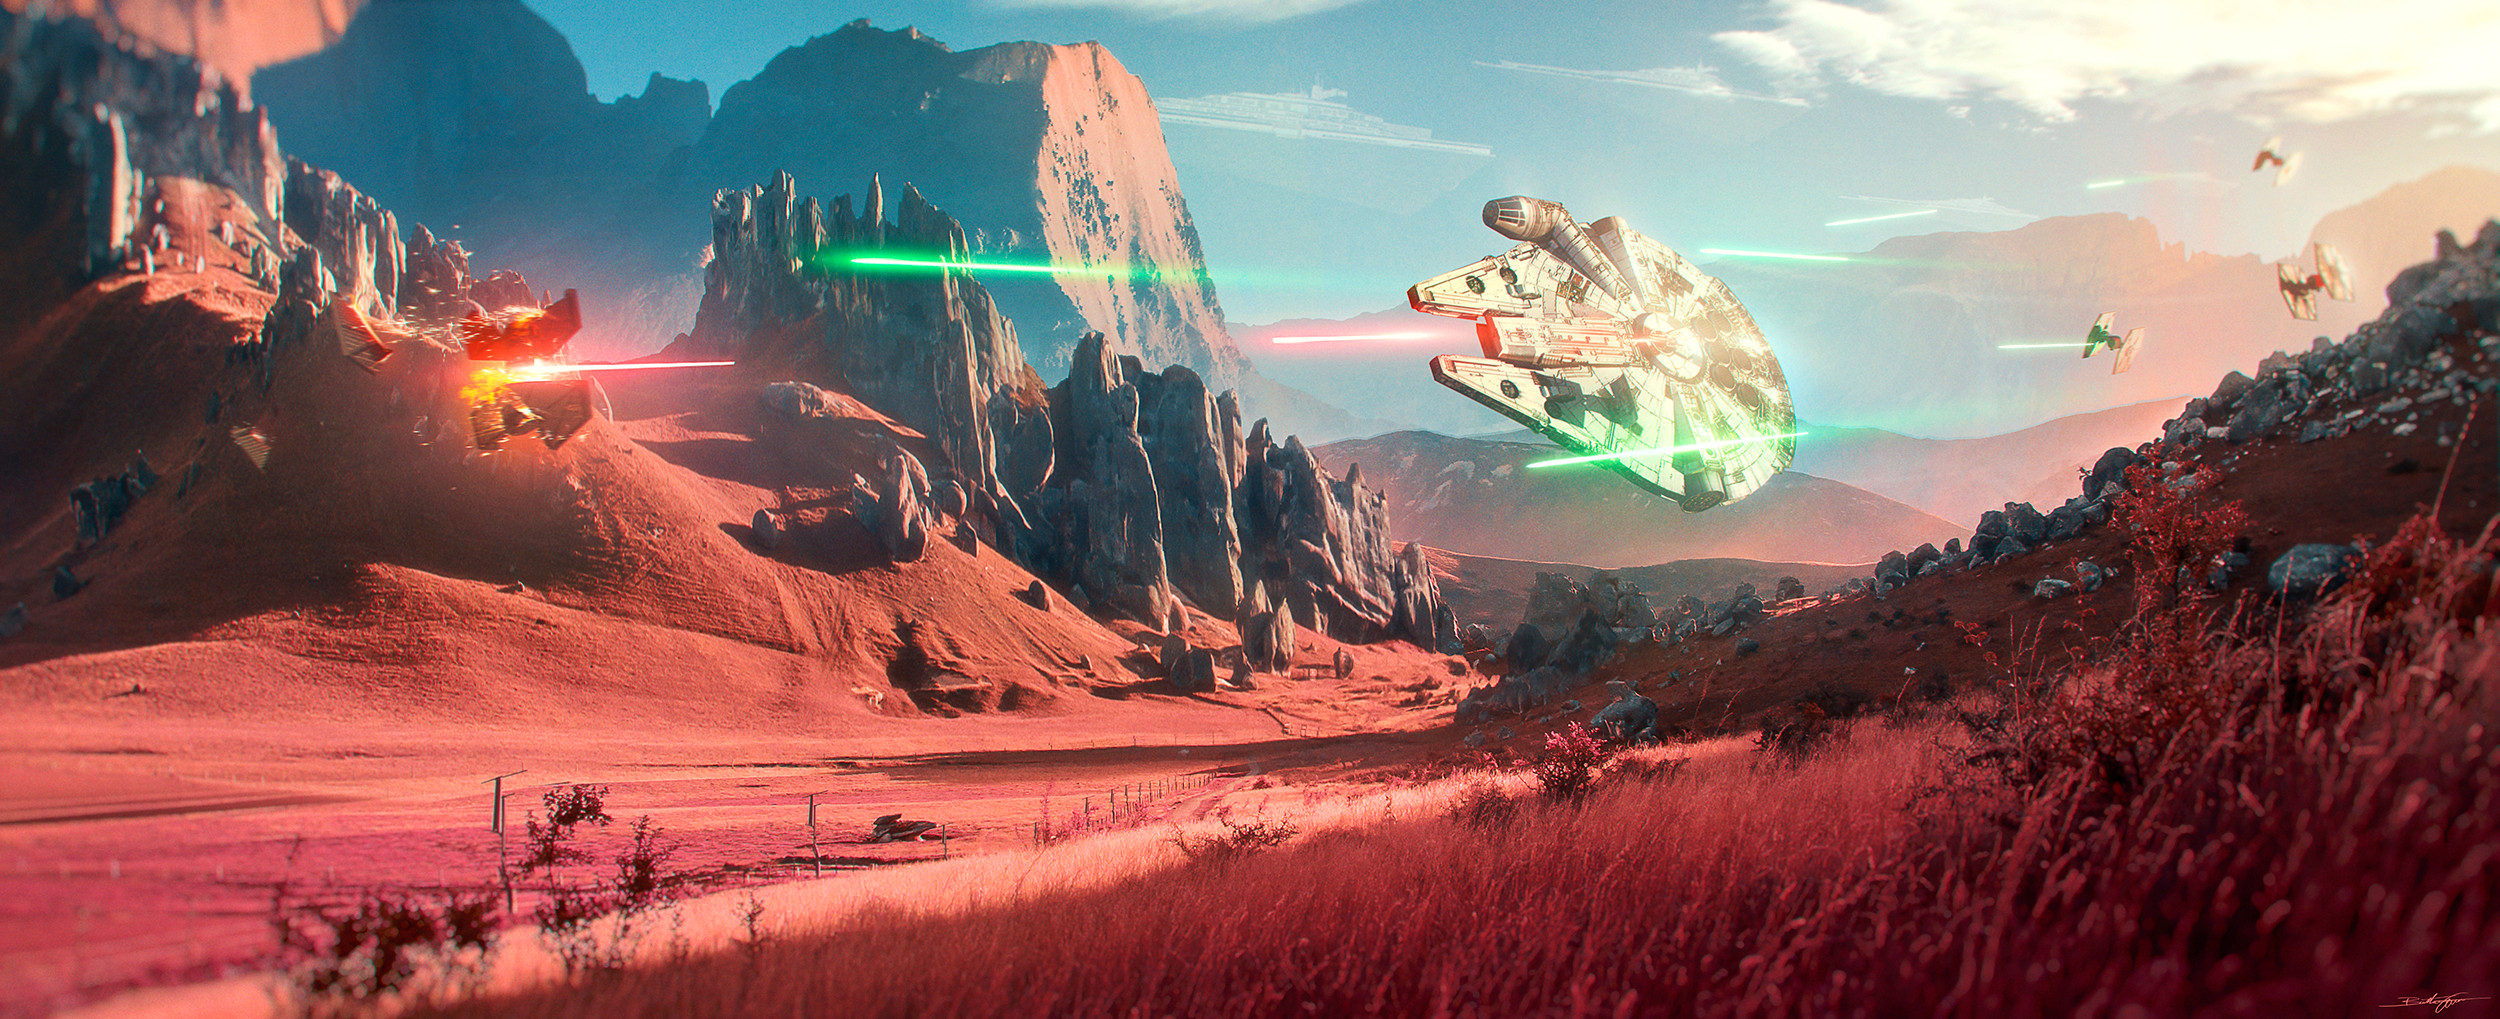 General 2500x1019 Millennium Falcon Star Wars artwork landscape fictional ultrawide